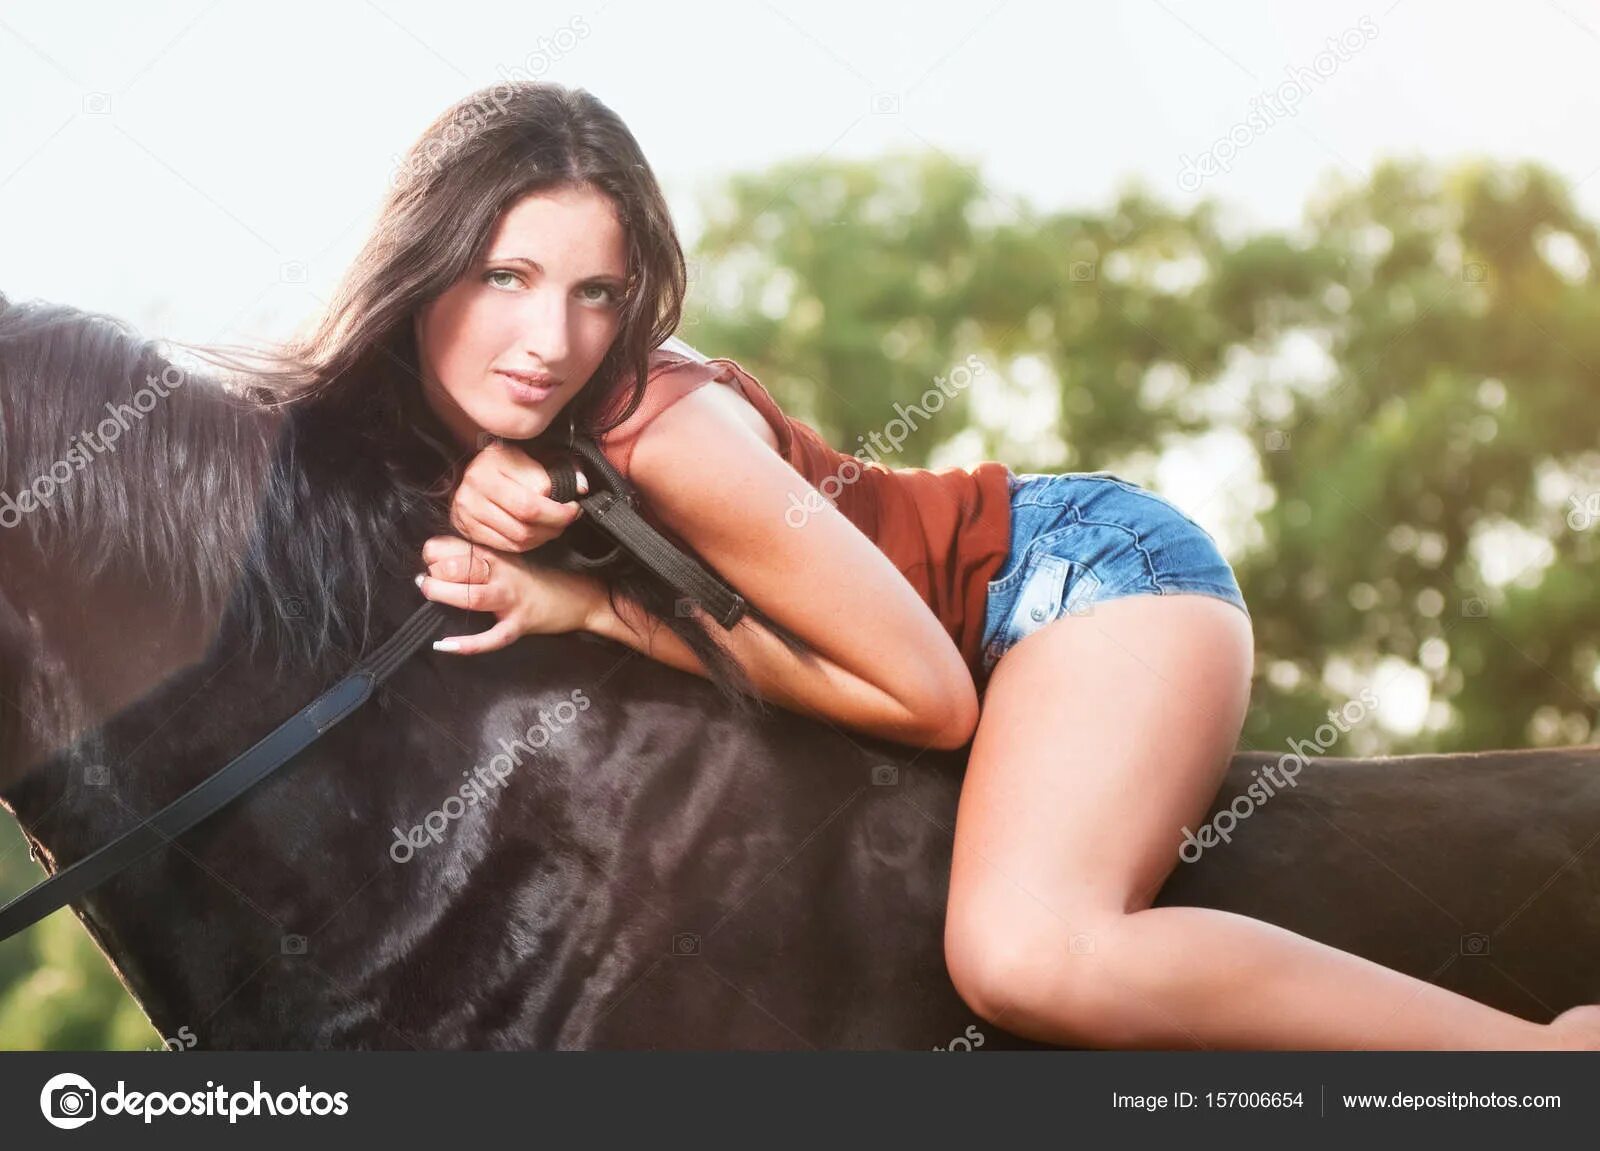 Девушка лежит на коне. Девушка лёжа на коне. Женщина лежит с лошадью. Женщина и лошадь лежа.